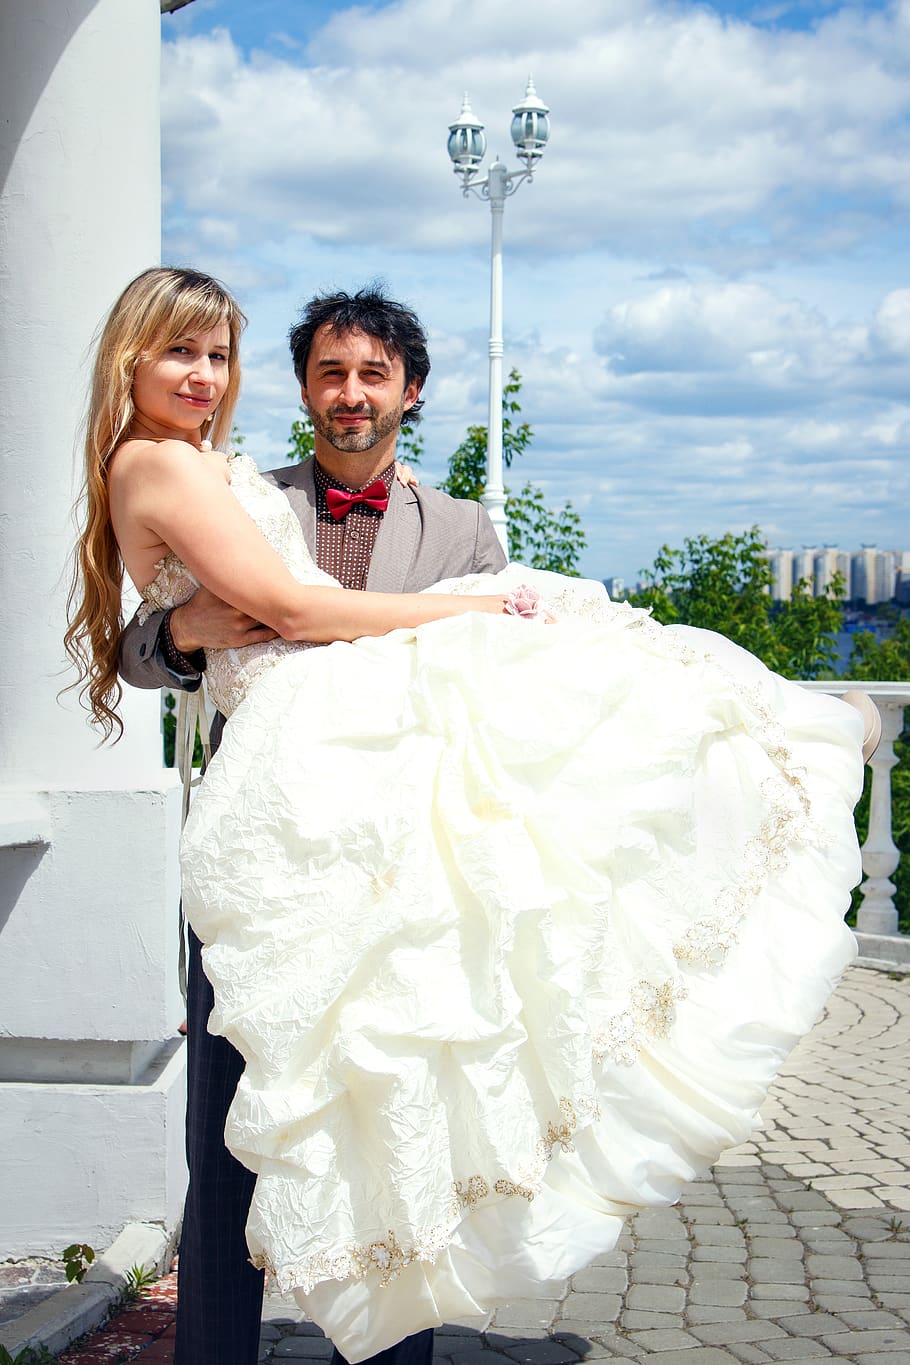 Man Carrying Woman in White Wedding Dress, adult, beautiful, bridal